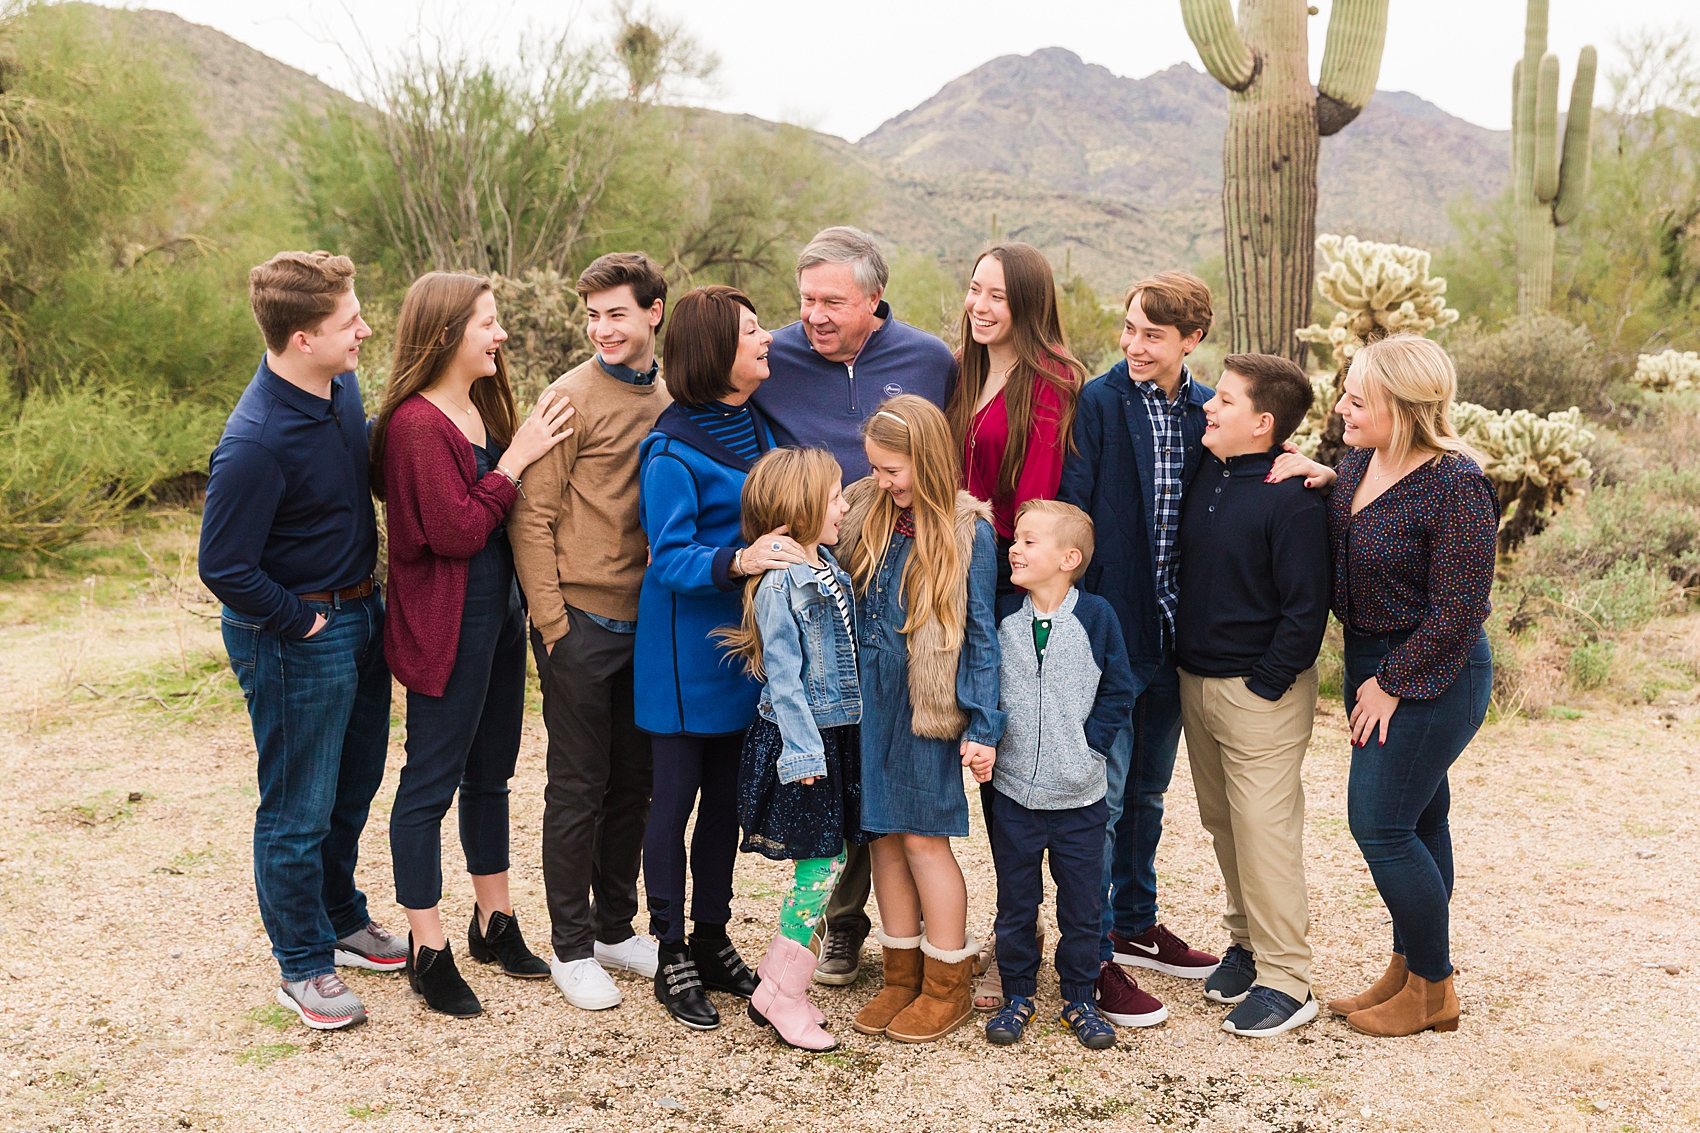 Leah Hope Photography | Scottsdale Phoenix Arizona | Family Pictures Photographer | Extended Family Photos | Grandparents | Multi-generational | Desert Landscape Cactus Scenery